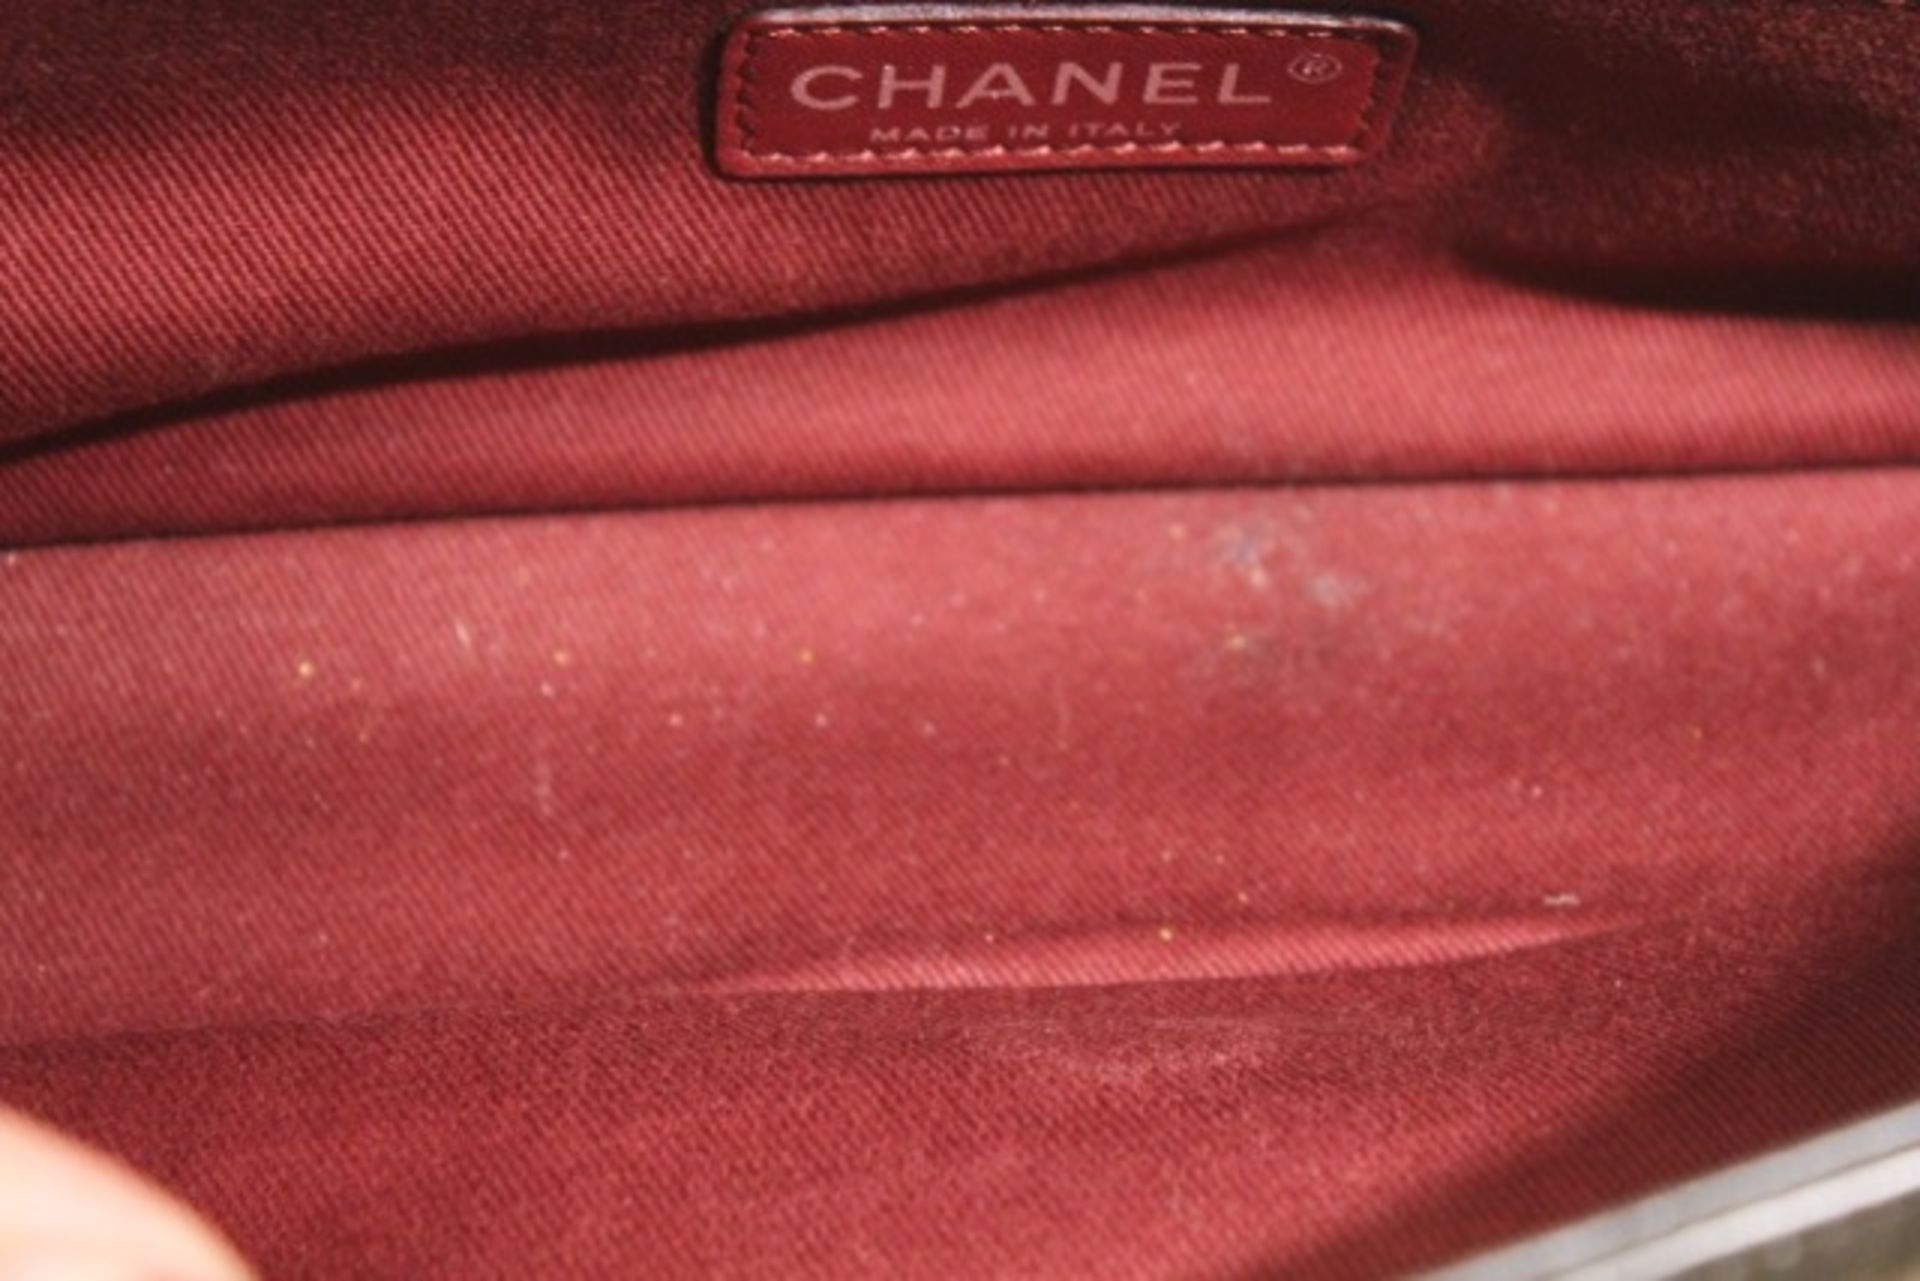 CHANEL Pondichery Flap Bag Metallic Grey with Ruthenium Hardware - Image 7 of 17